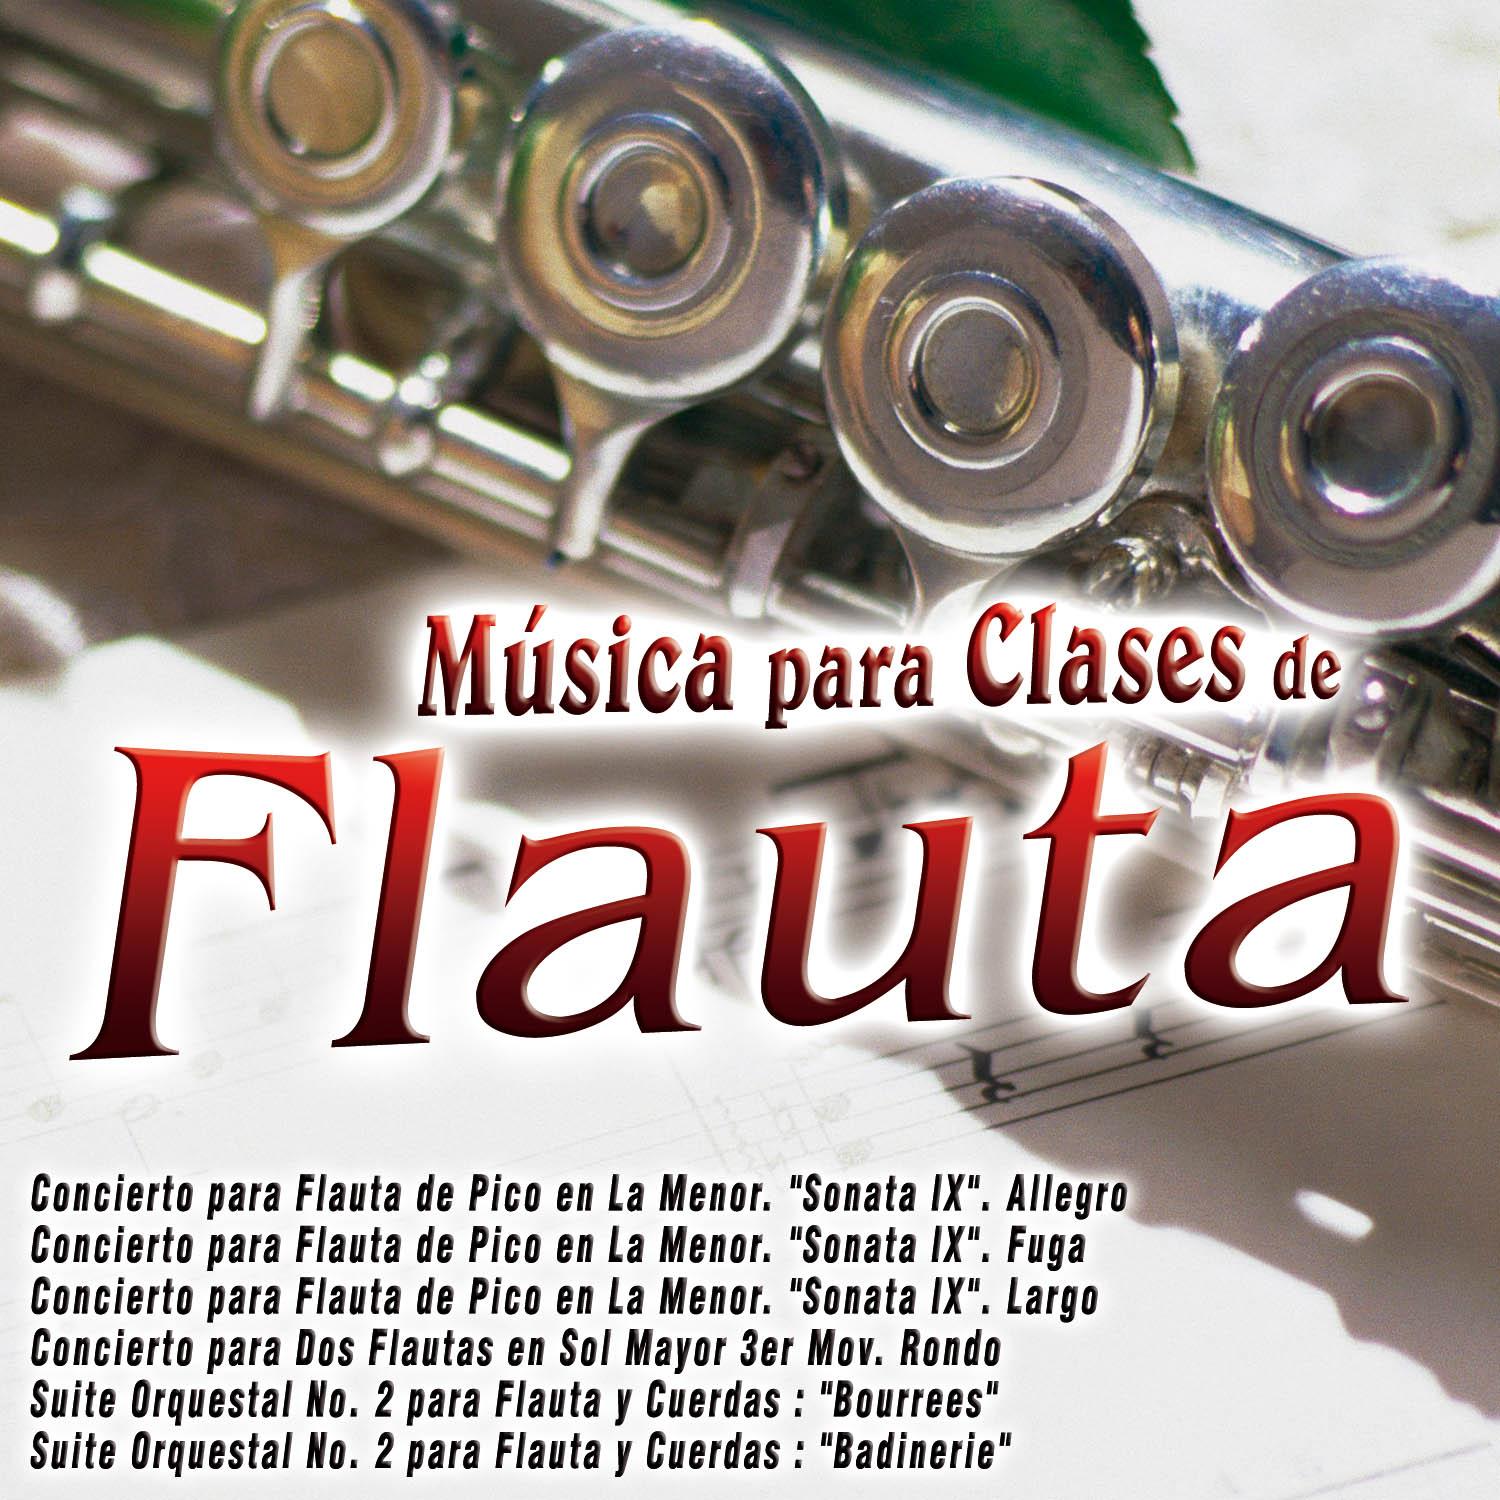 Concierto para Flauta de Pico en la Menor. "Sonata Ix". Largo